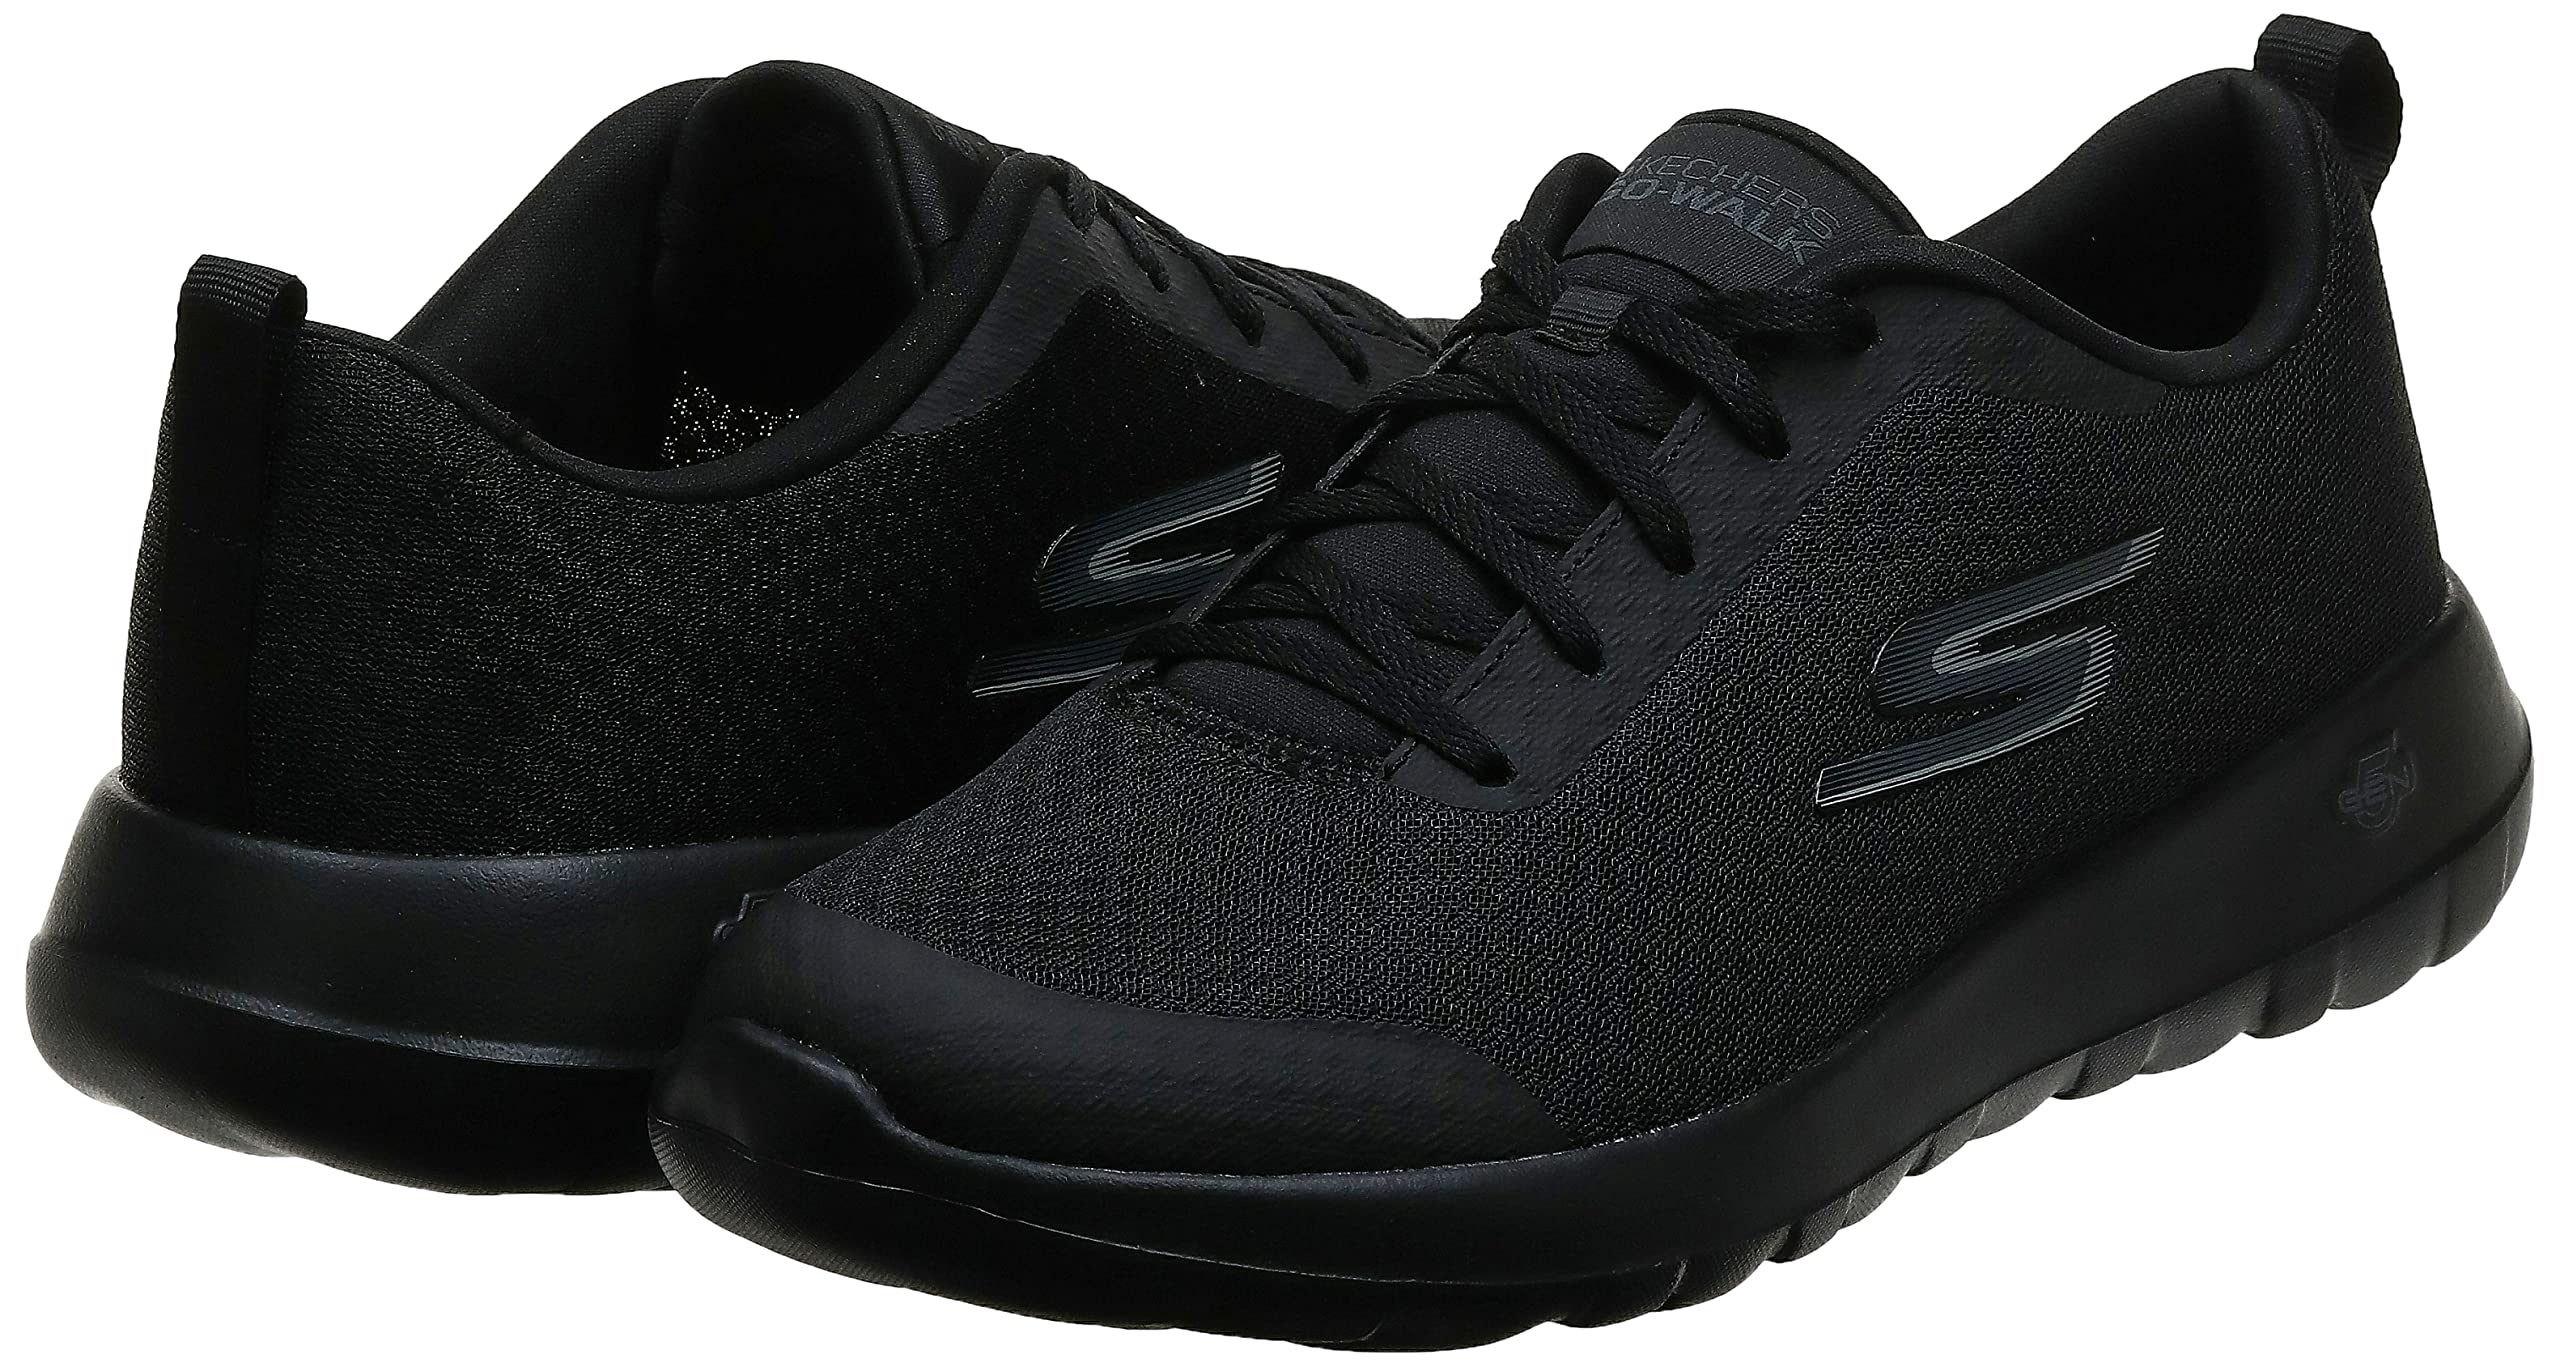 Skechers Men's Gowalk Max-Athletic Workout Walking Shoe with Air Cooled Foam Sneaker